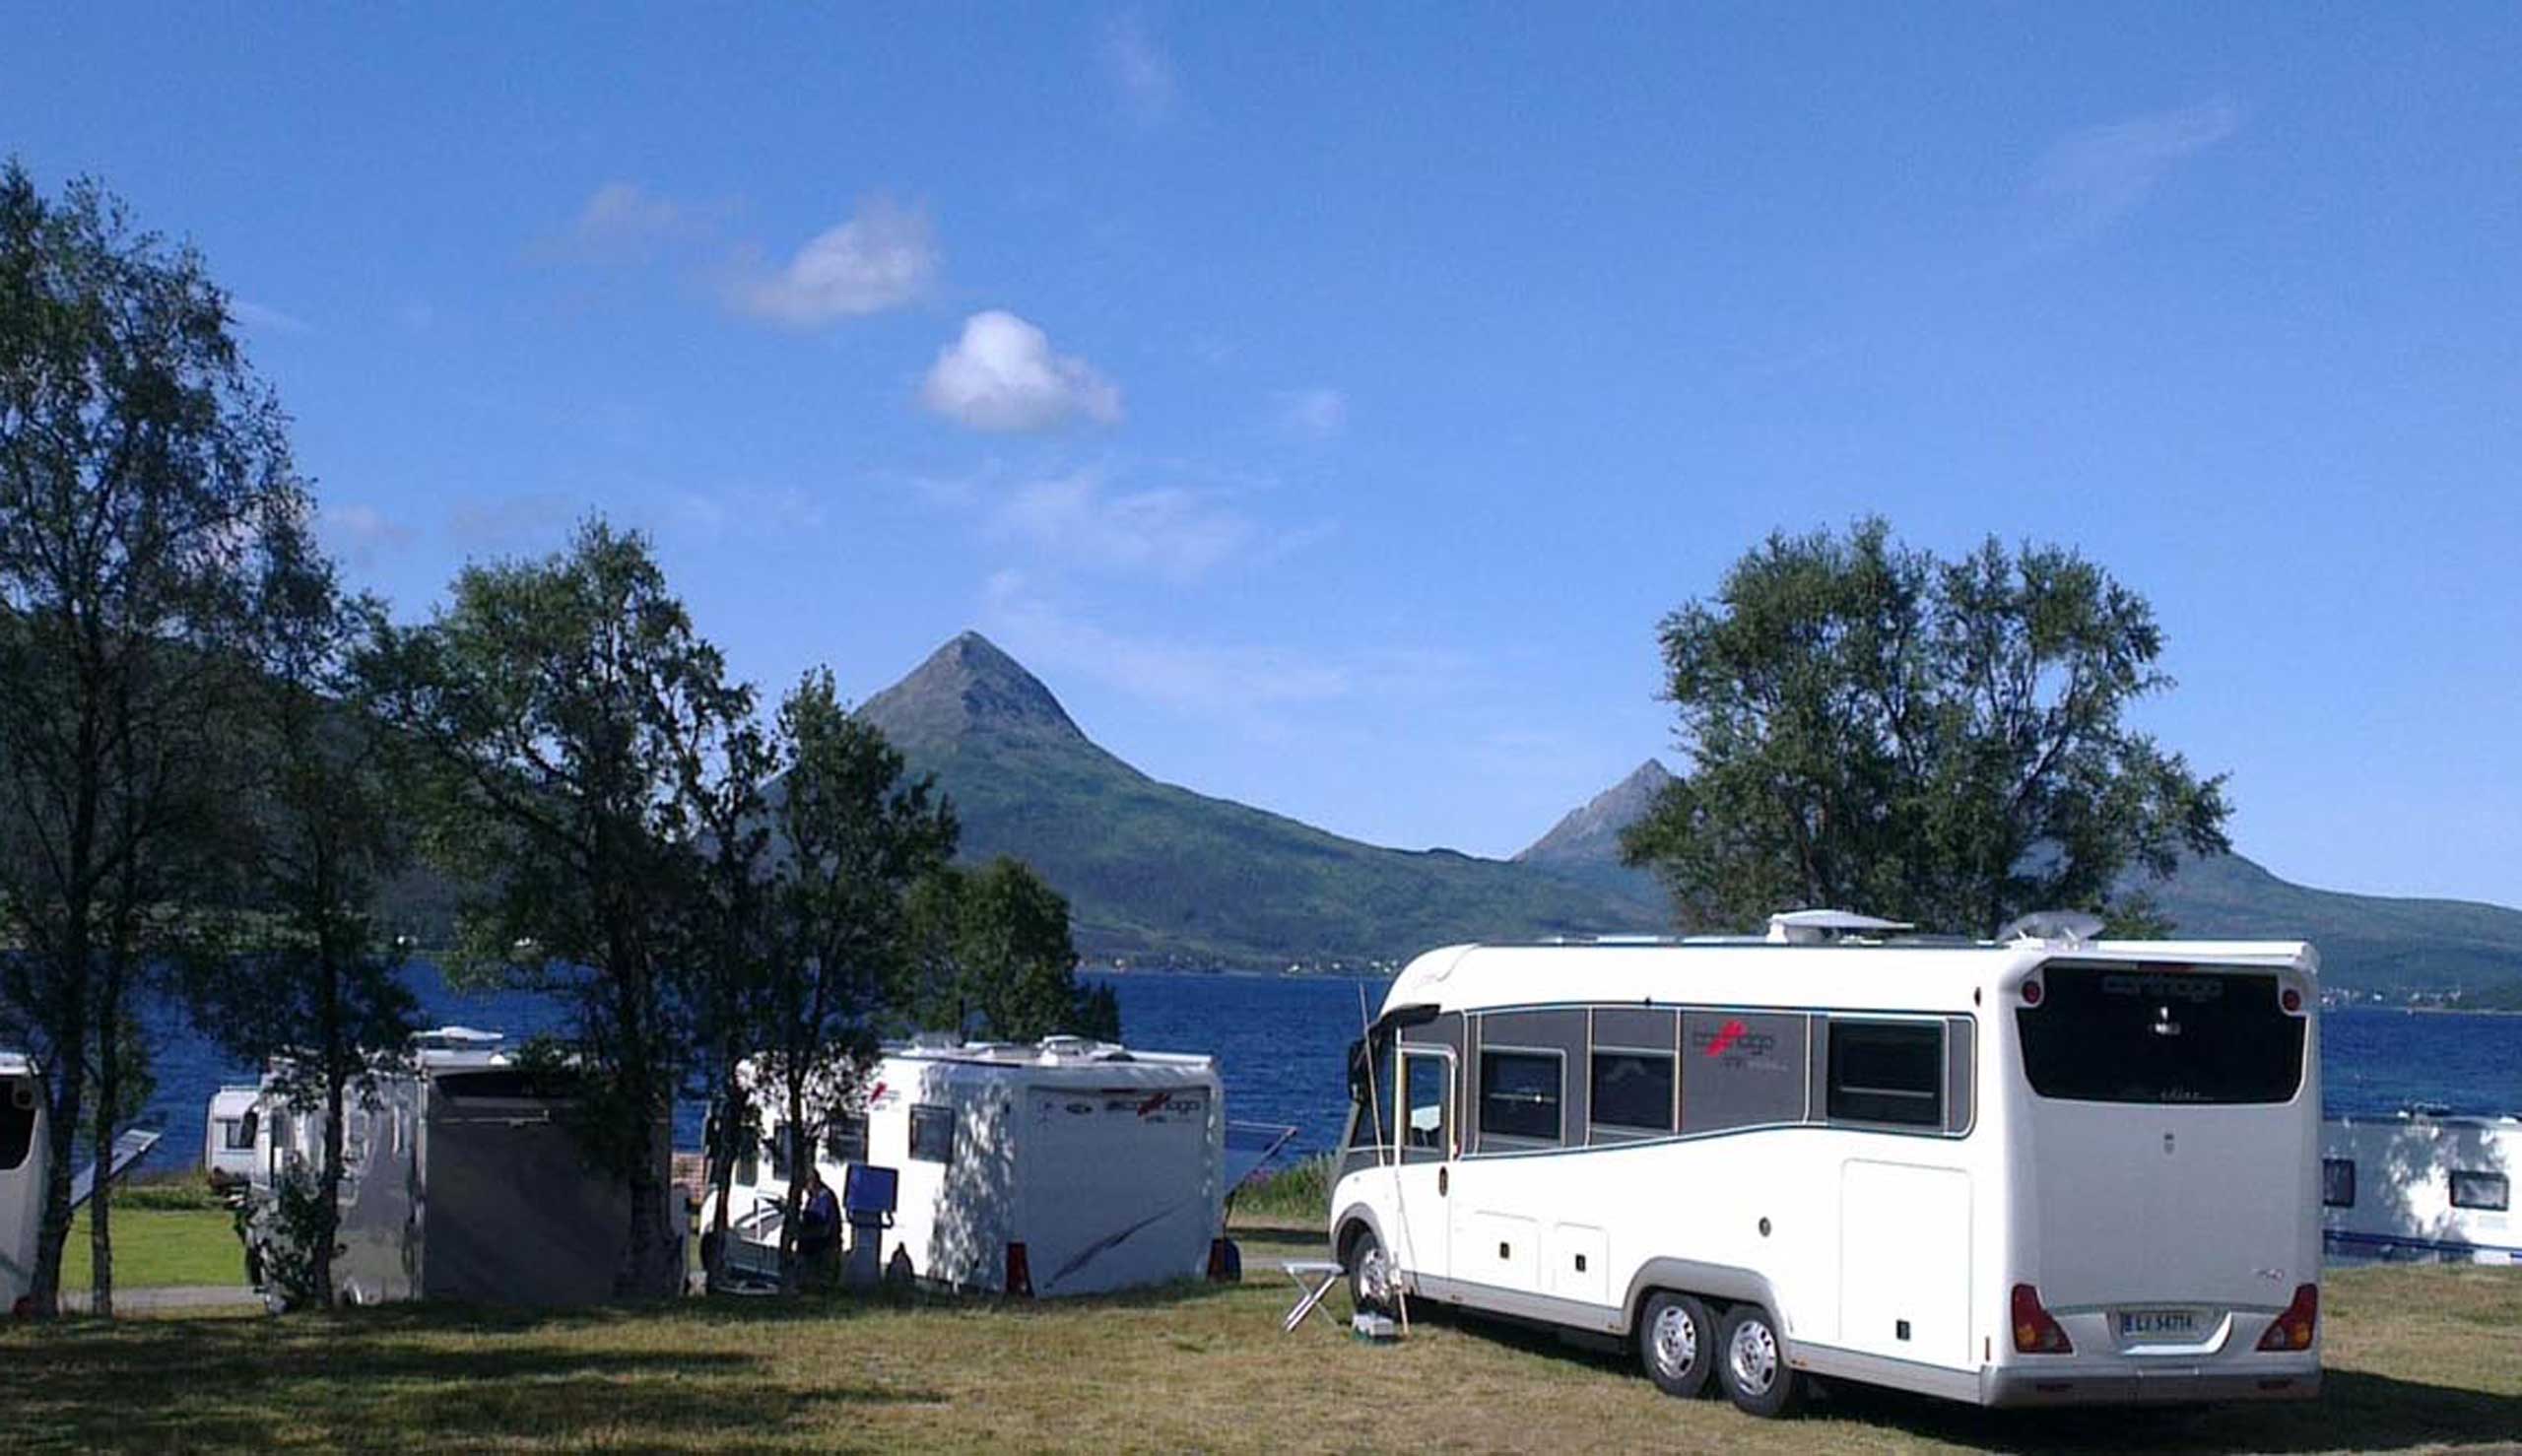 Fjordbotn Campingissä sinua ympäröivät kauniit näkymät. Copyright: Fjordbotn Camping